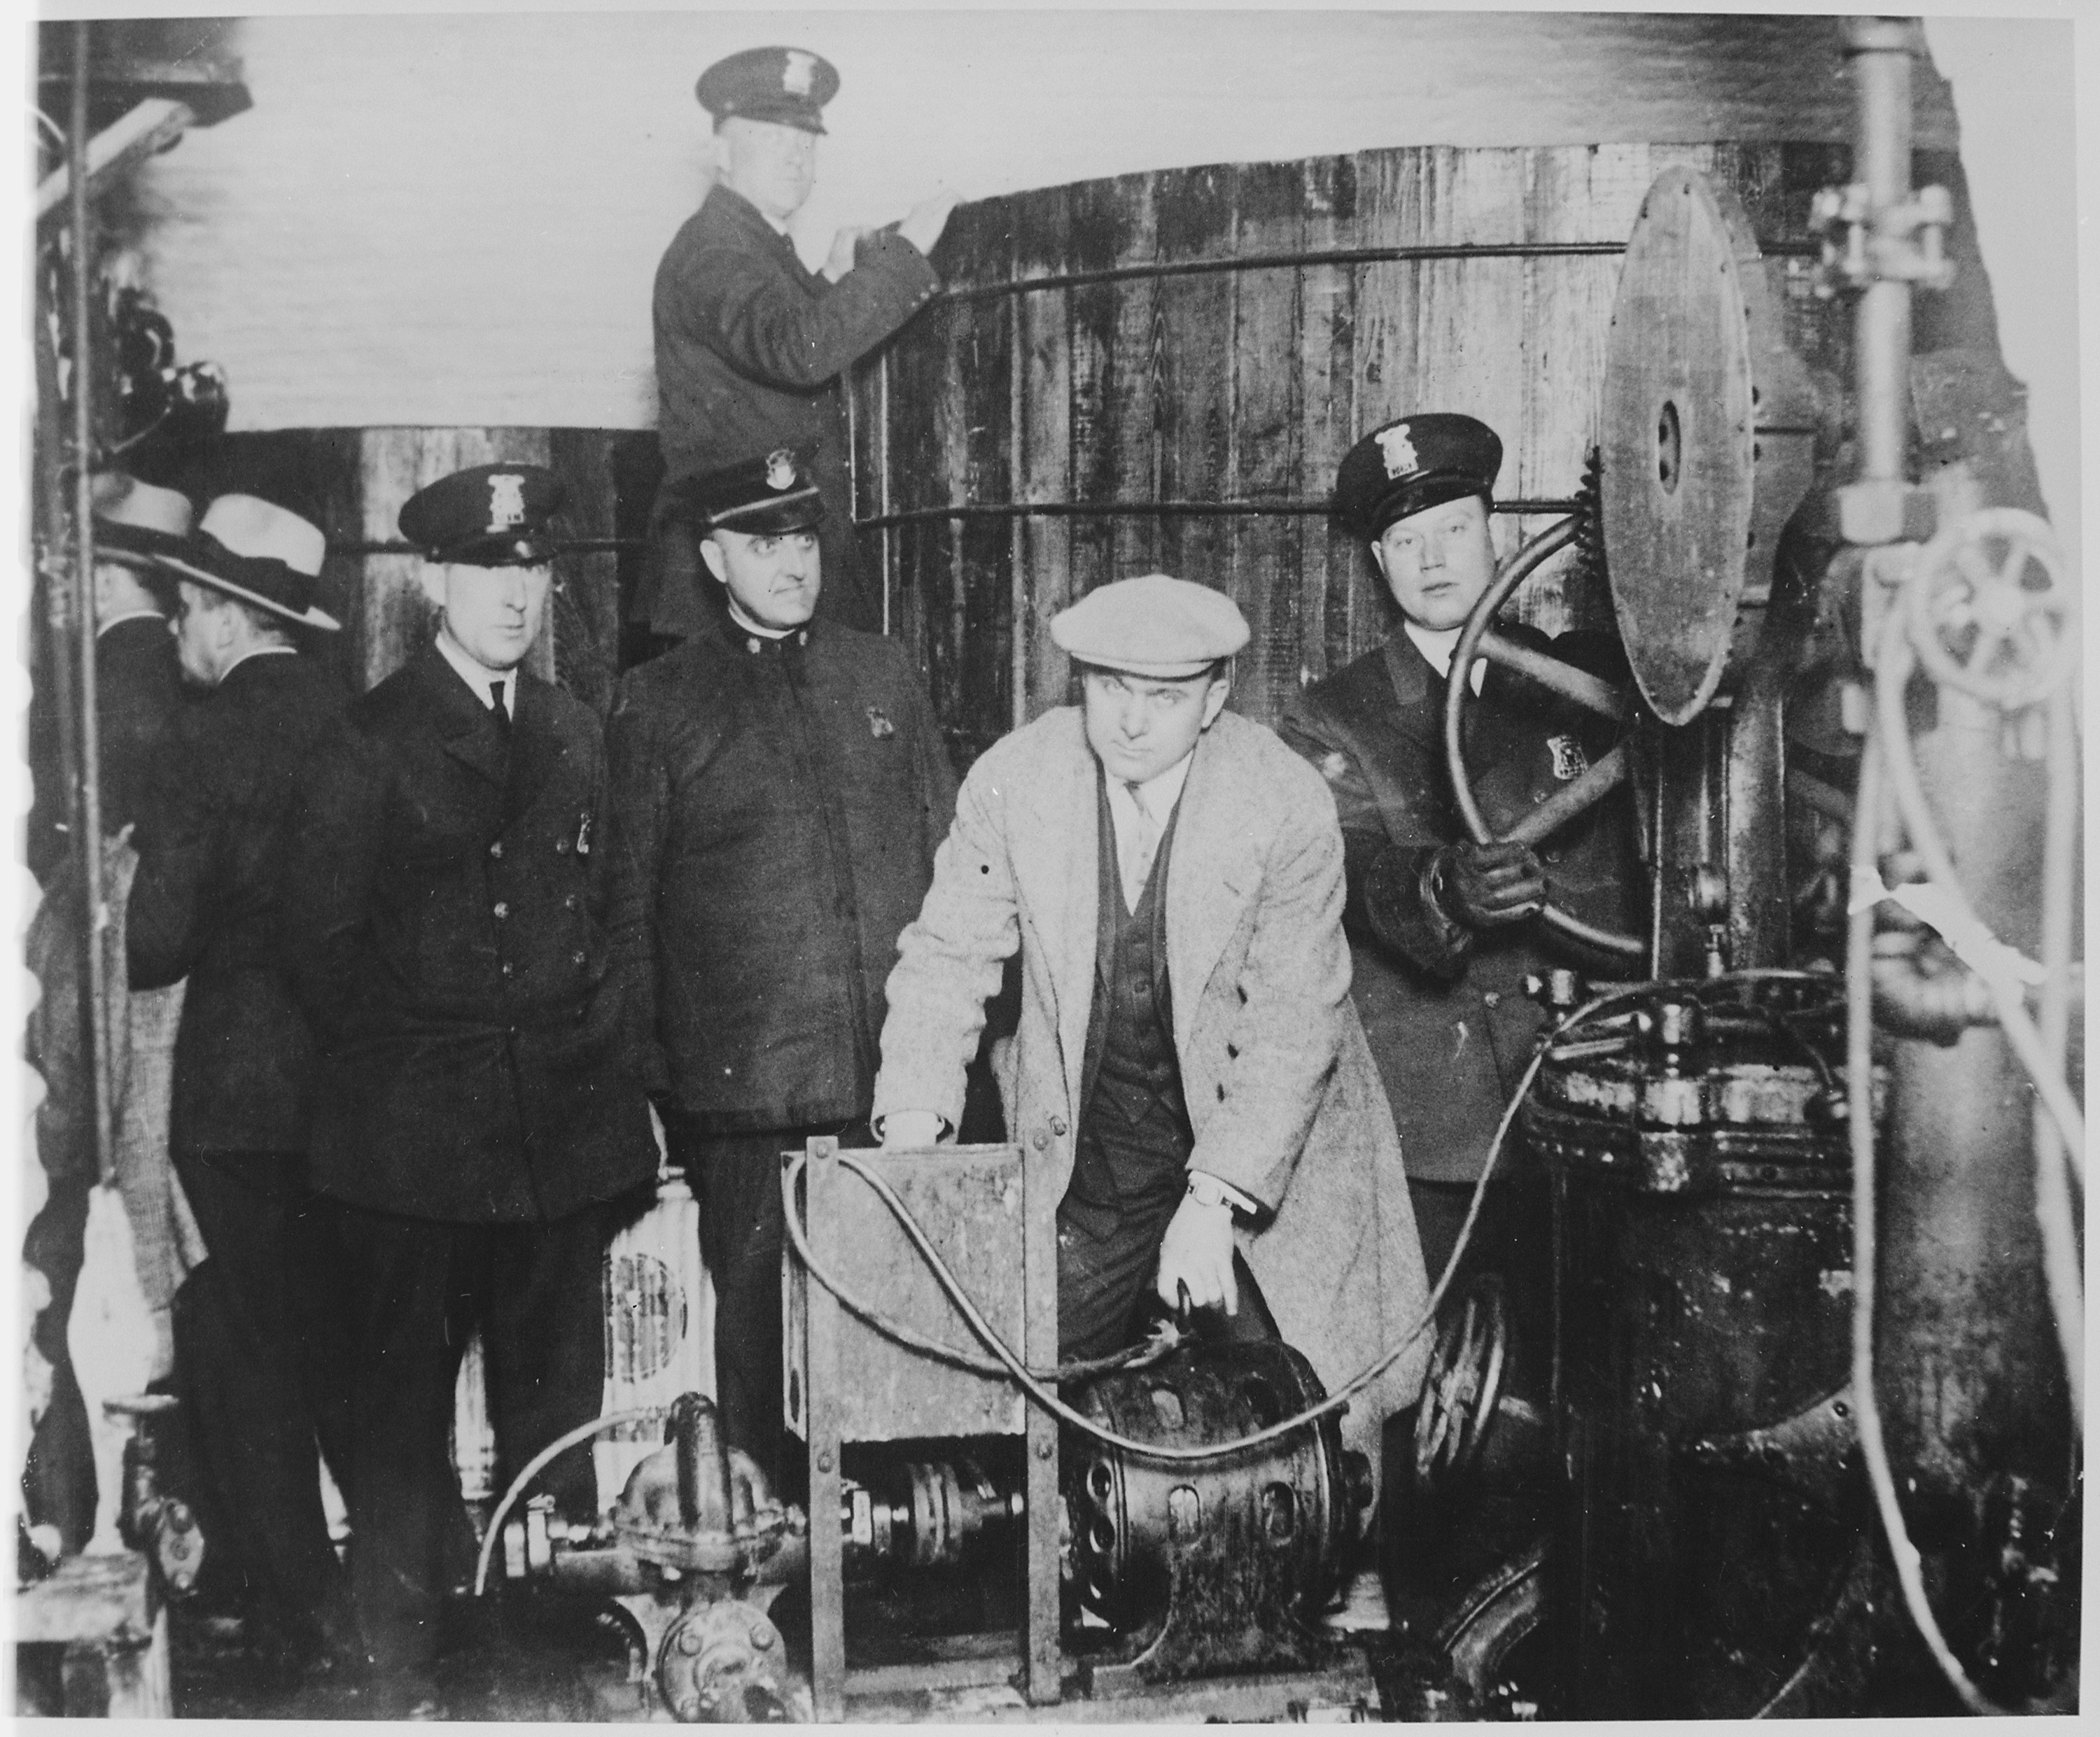 Prohibition in the United States - Wikipedia